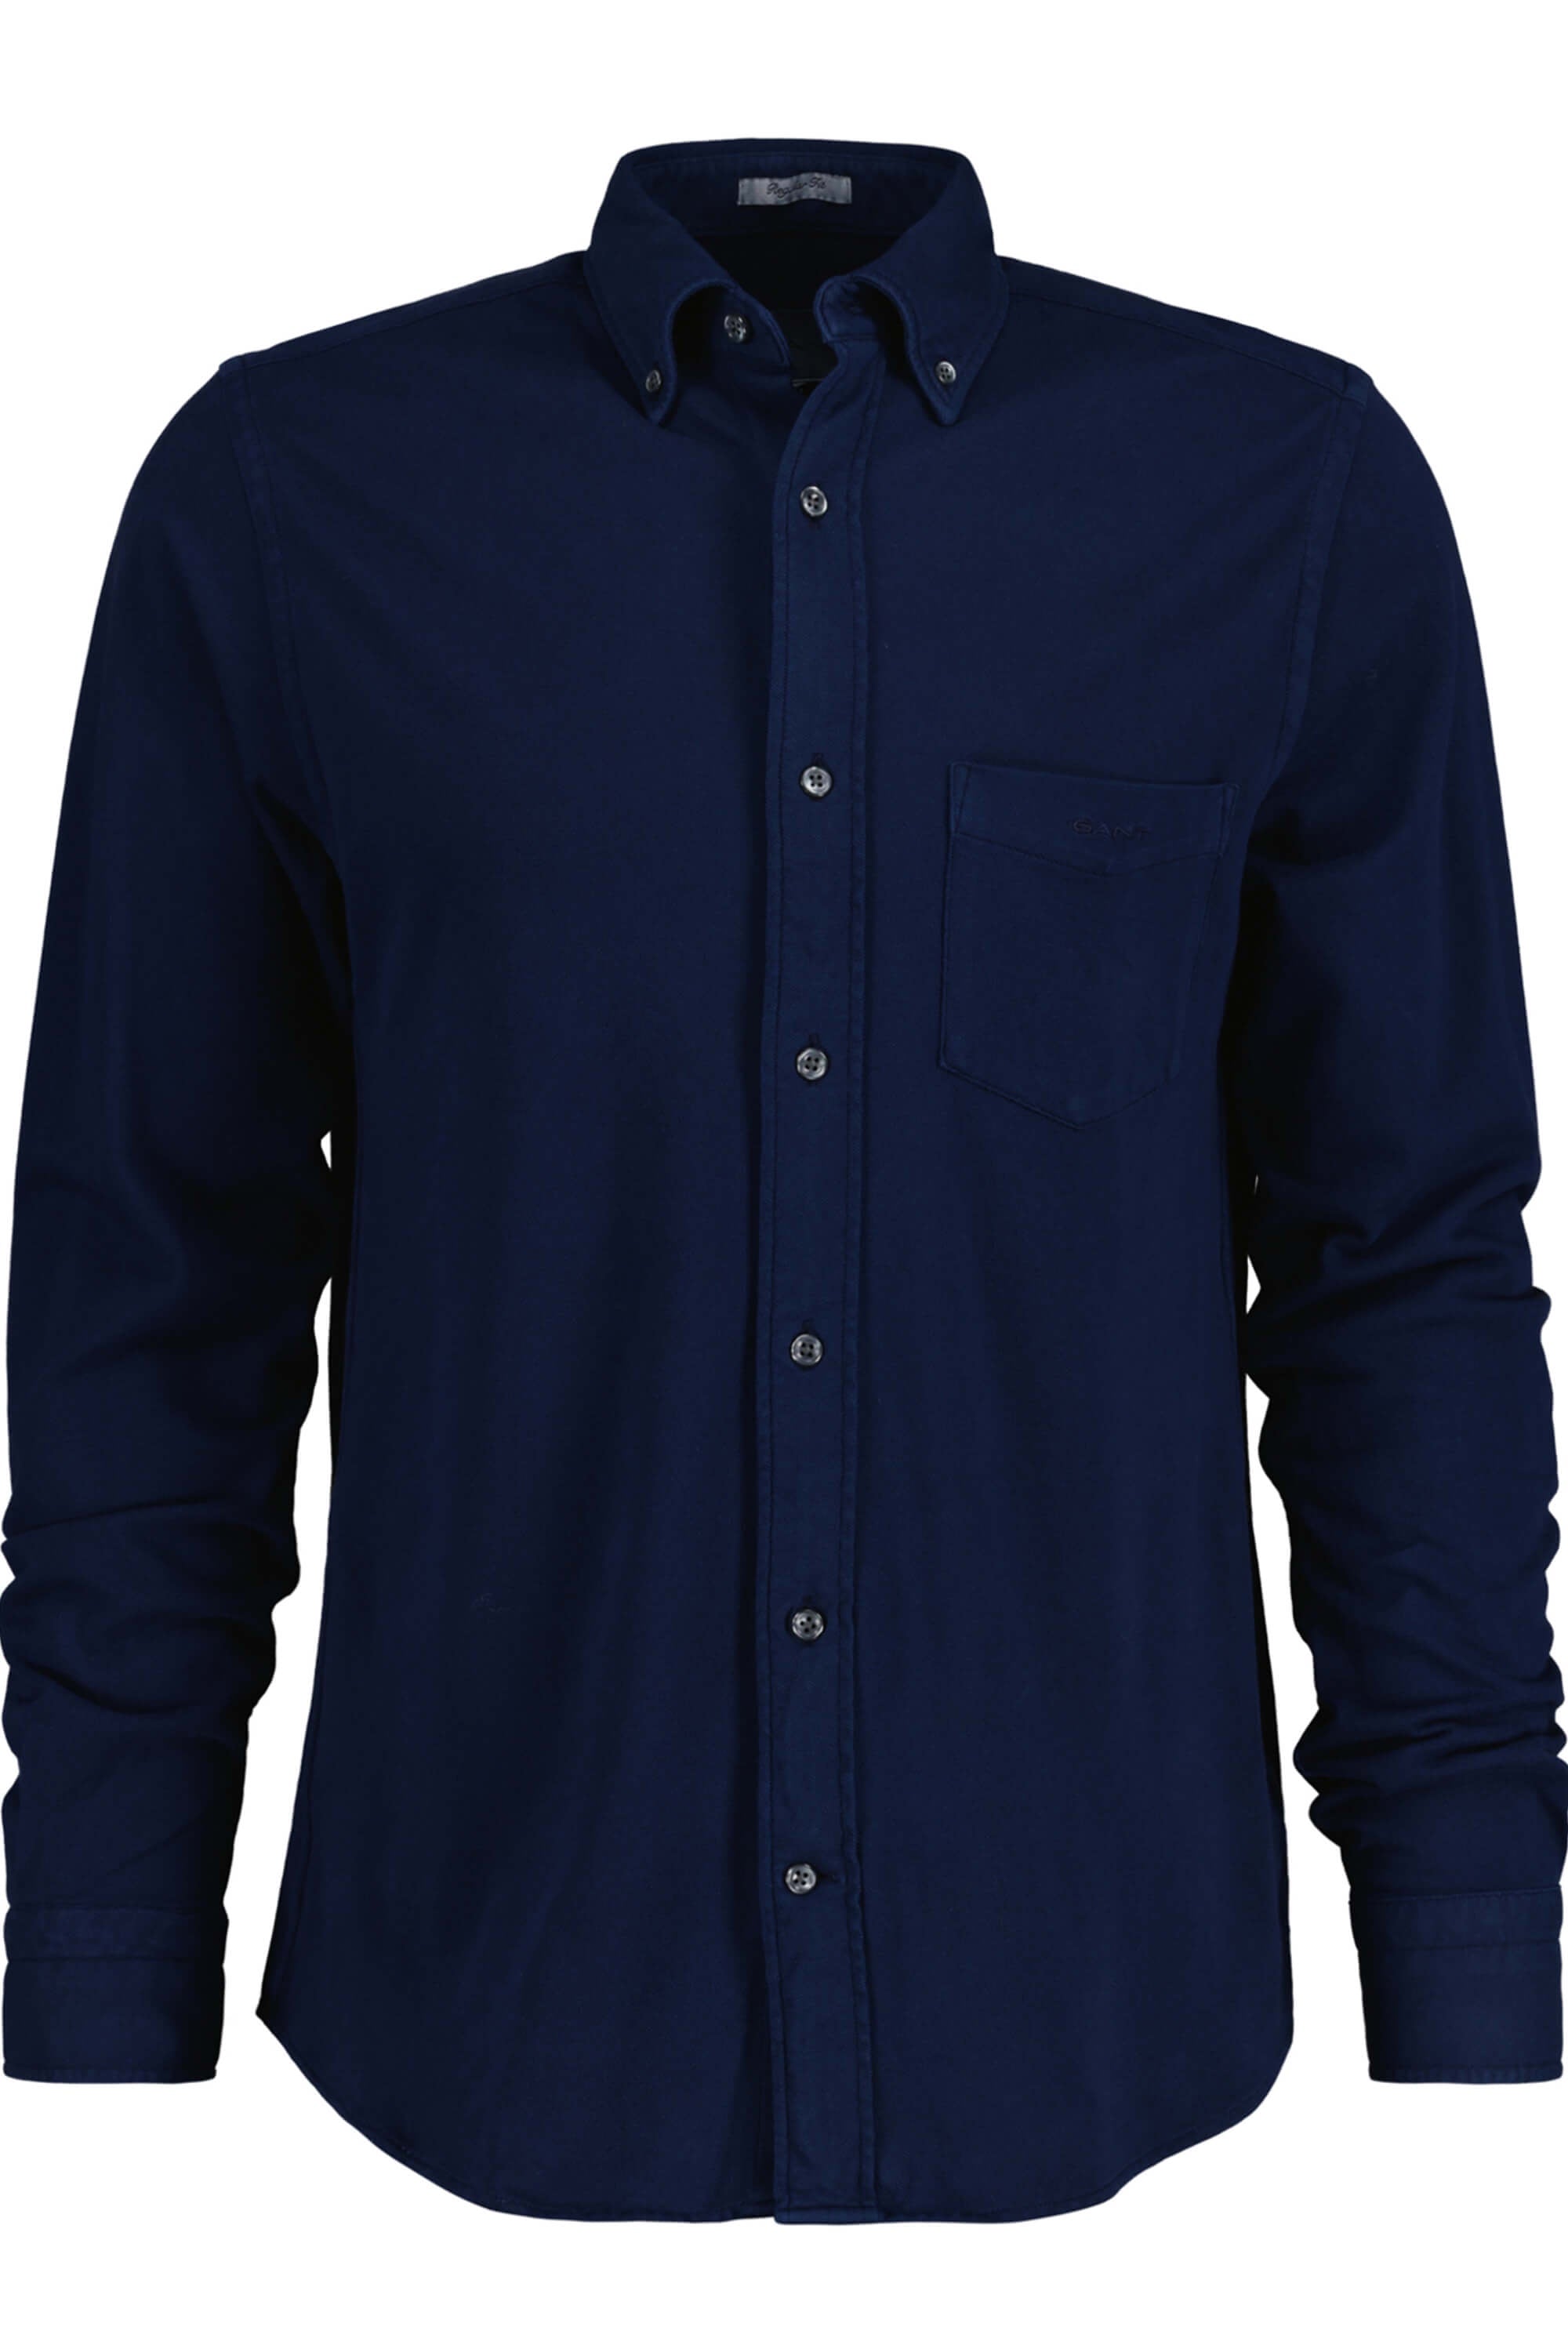 Gant Dyed Jersey Pique Shirt